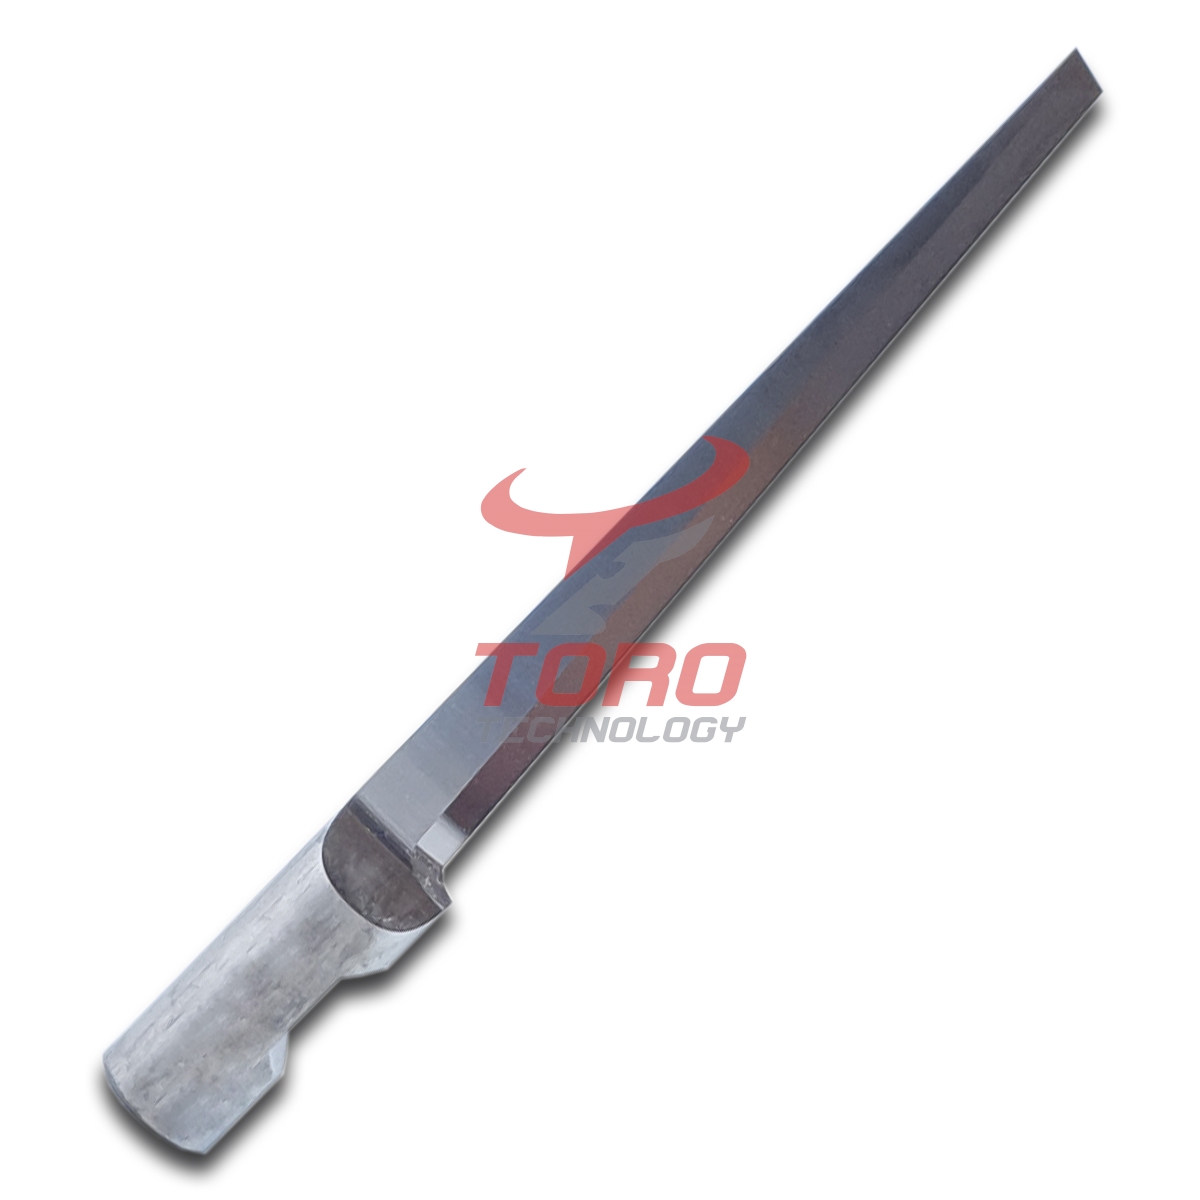 Knife Blade AXYZ B1031-40 Multicam 003612-MC140396, 84-00193-BT-57240